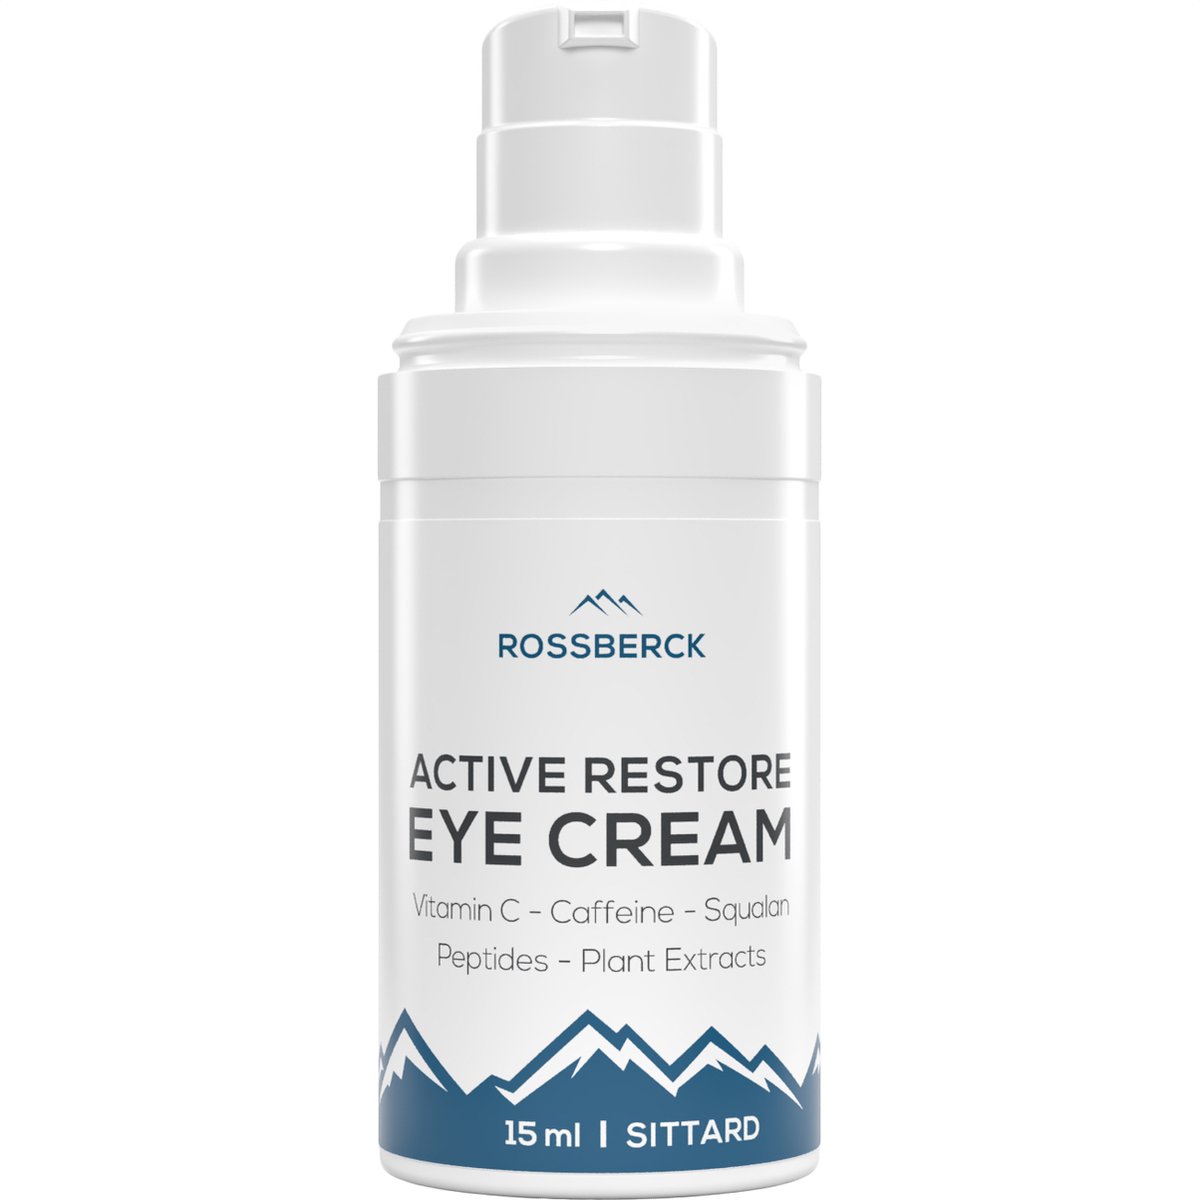 Active Restore Eye Cream - Oogcrème Mannen - Anti Rimpel, Donkere Kringen, Fijne Lijntjes & Wallen - Vitamine C & Cafeïne - 15 ml - Rossberck